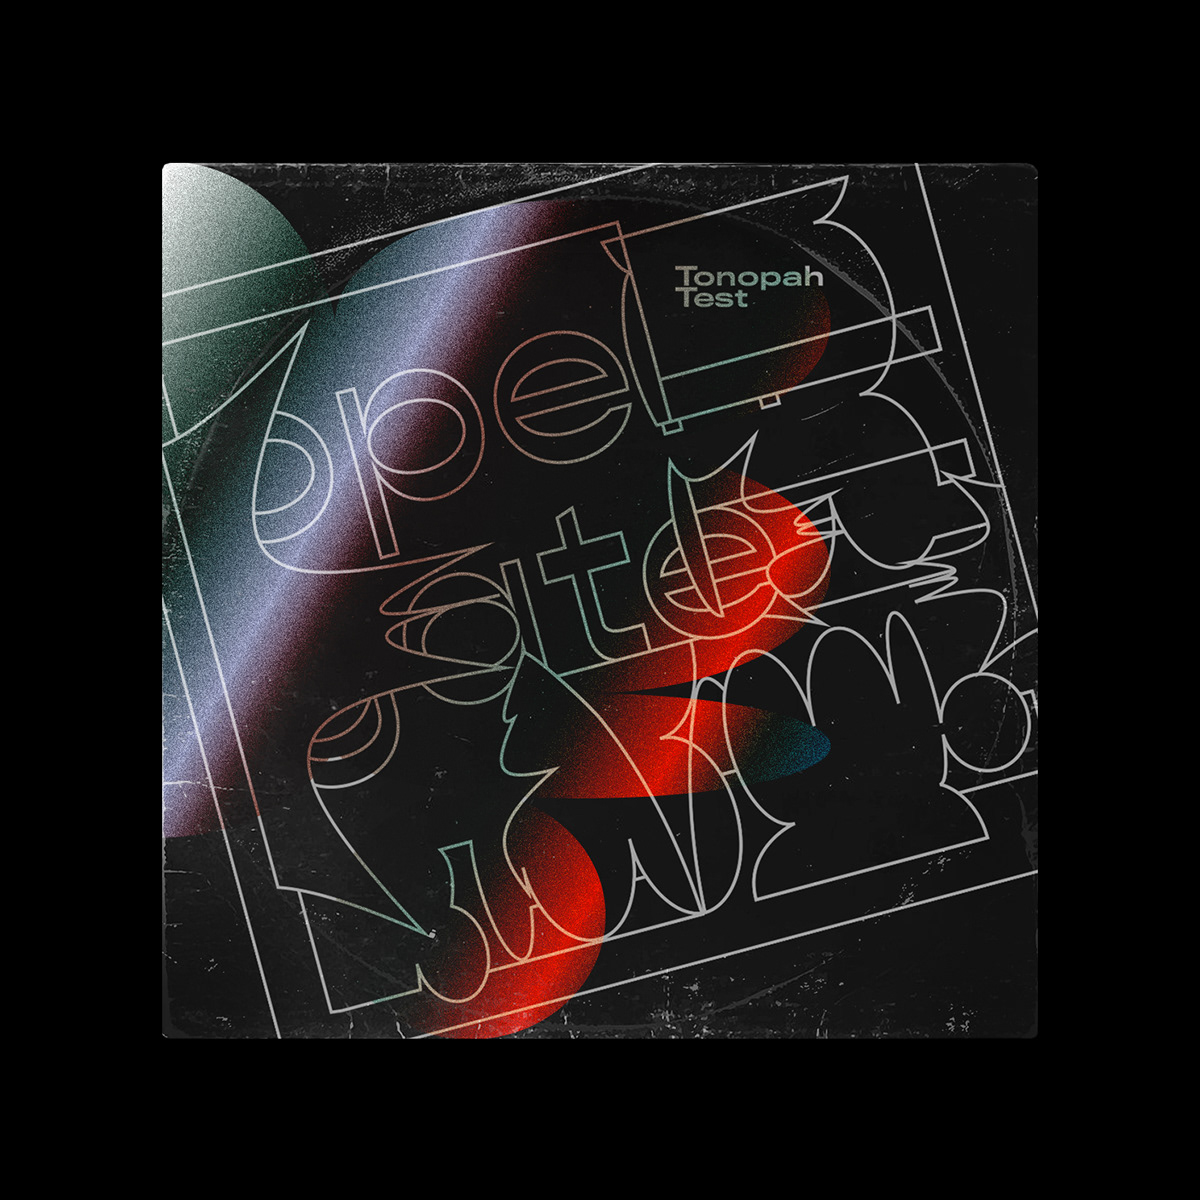 BRUTALIST CD COVERS album cover cd COVER COVER ART VINYL COVER UNDERGROUND electro Music Artwork LANDESKRONE INSTITUTE sonic warfare typography   ILLUSTRATION 